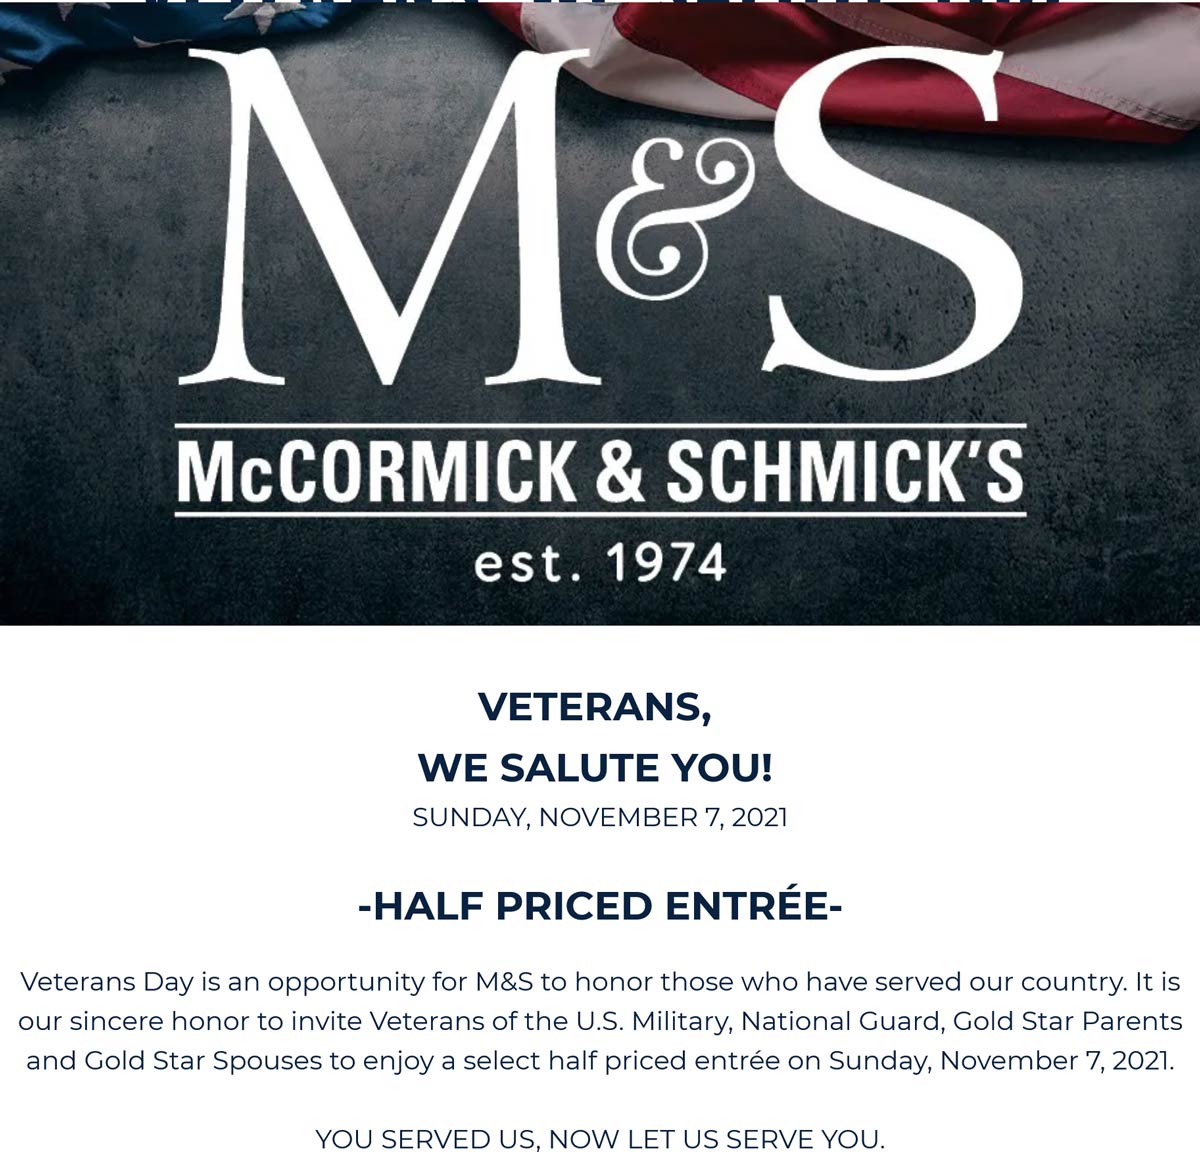 McCormick & Schmicks restaurants Coupon  Veterans enjoy 50% off an entree today at McCormick & Schmicks restaurants #mccormickschmicks 